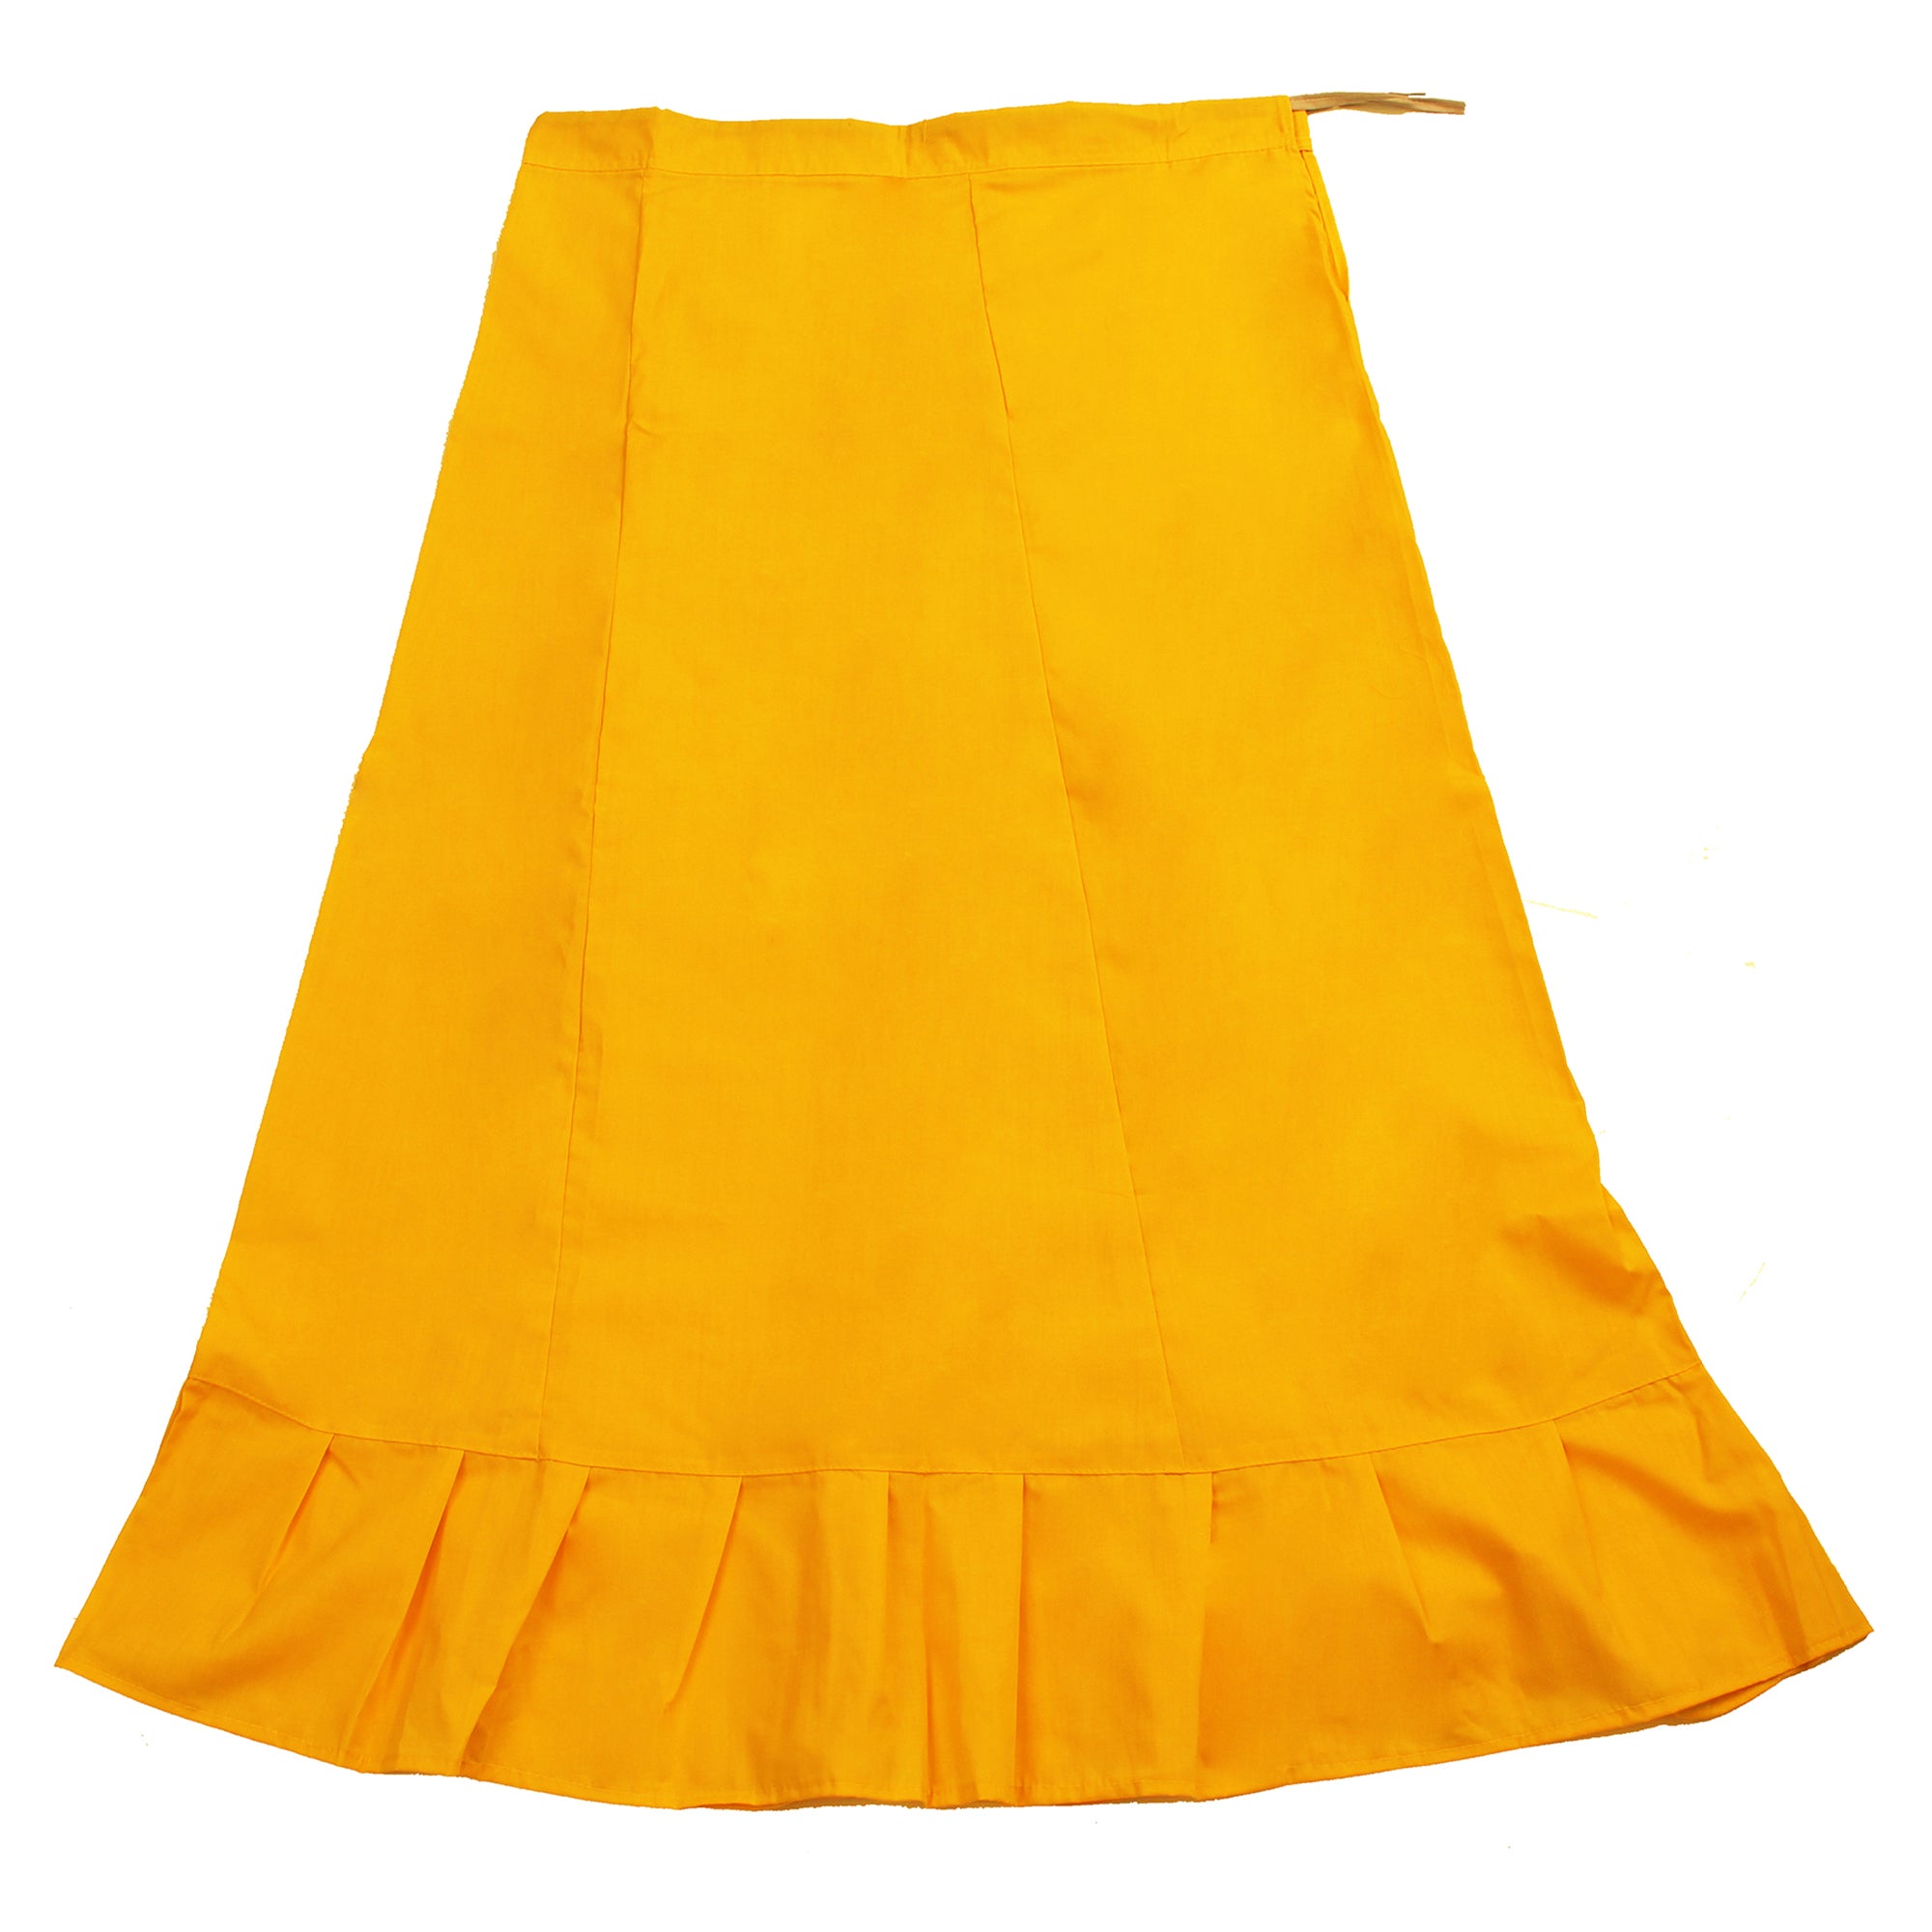 Gold/Mustard - Sari (Saree) Petticoat - Available in S, M, L & XL - Un